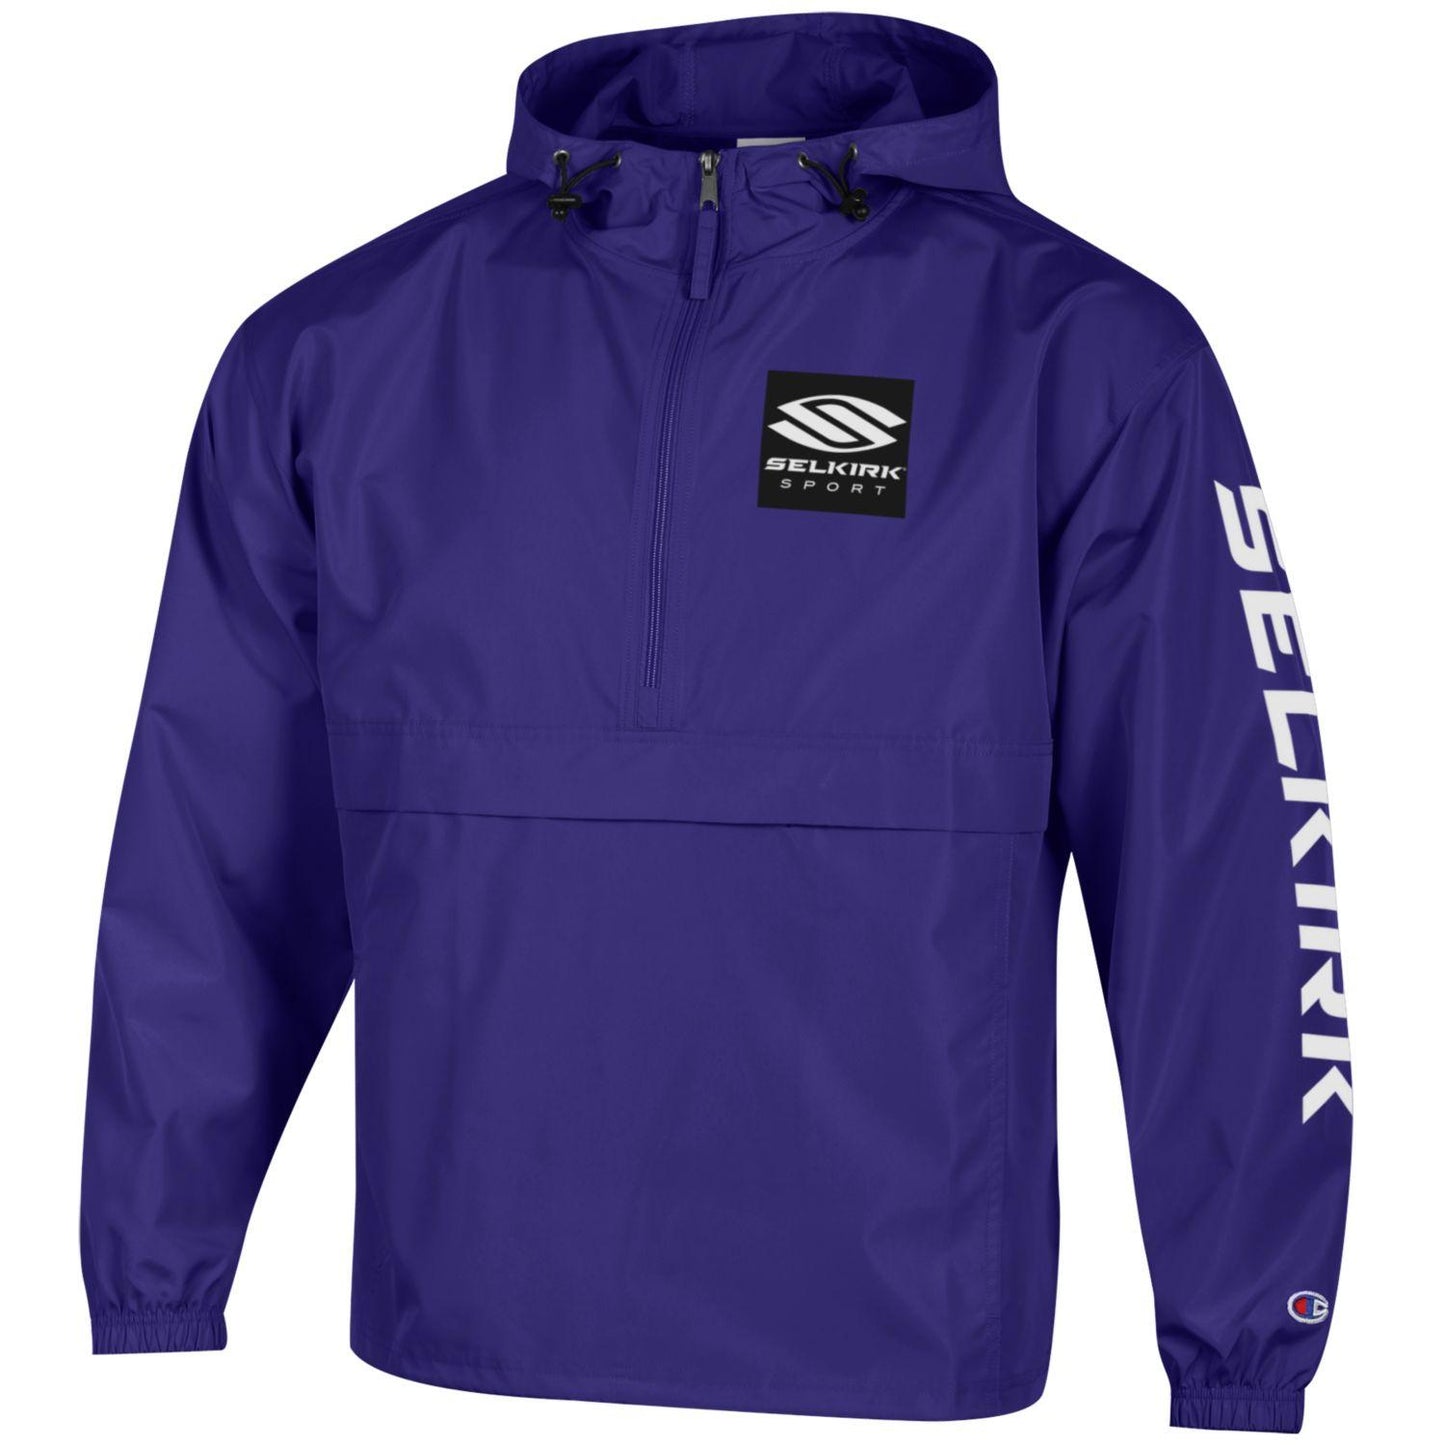 Selkirk x Champion Packable Jacket by Selkirk Sport